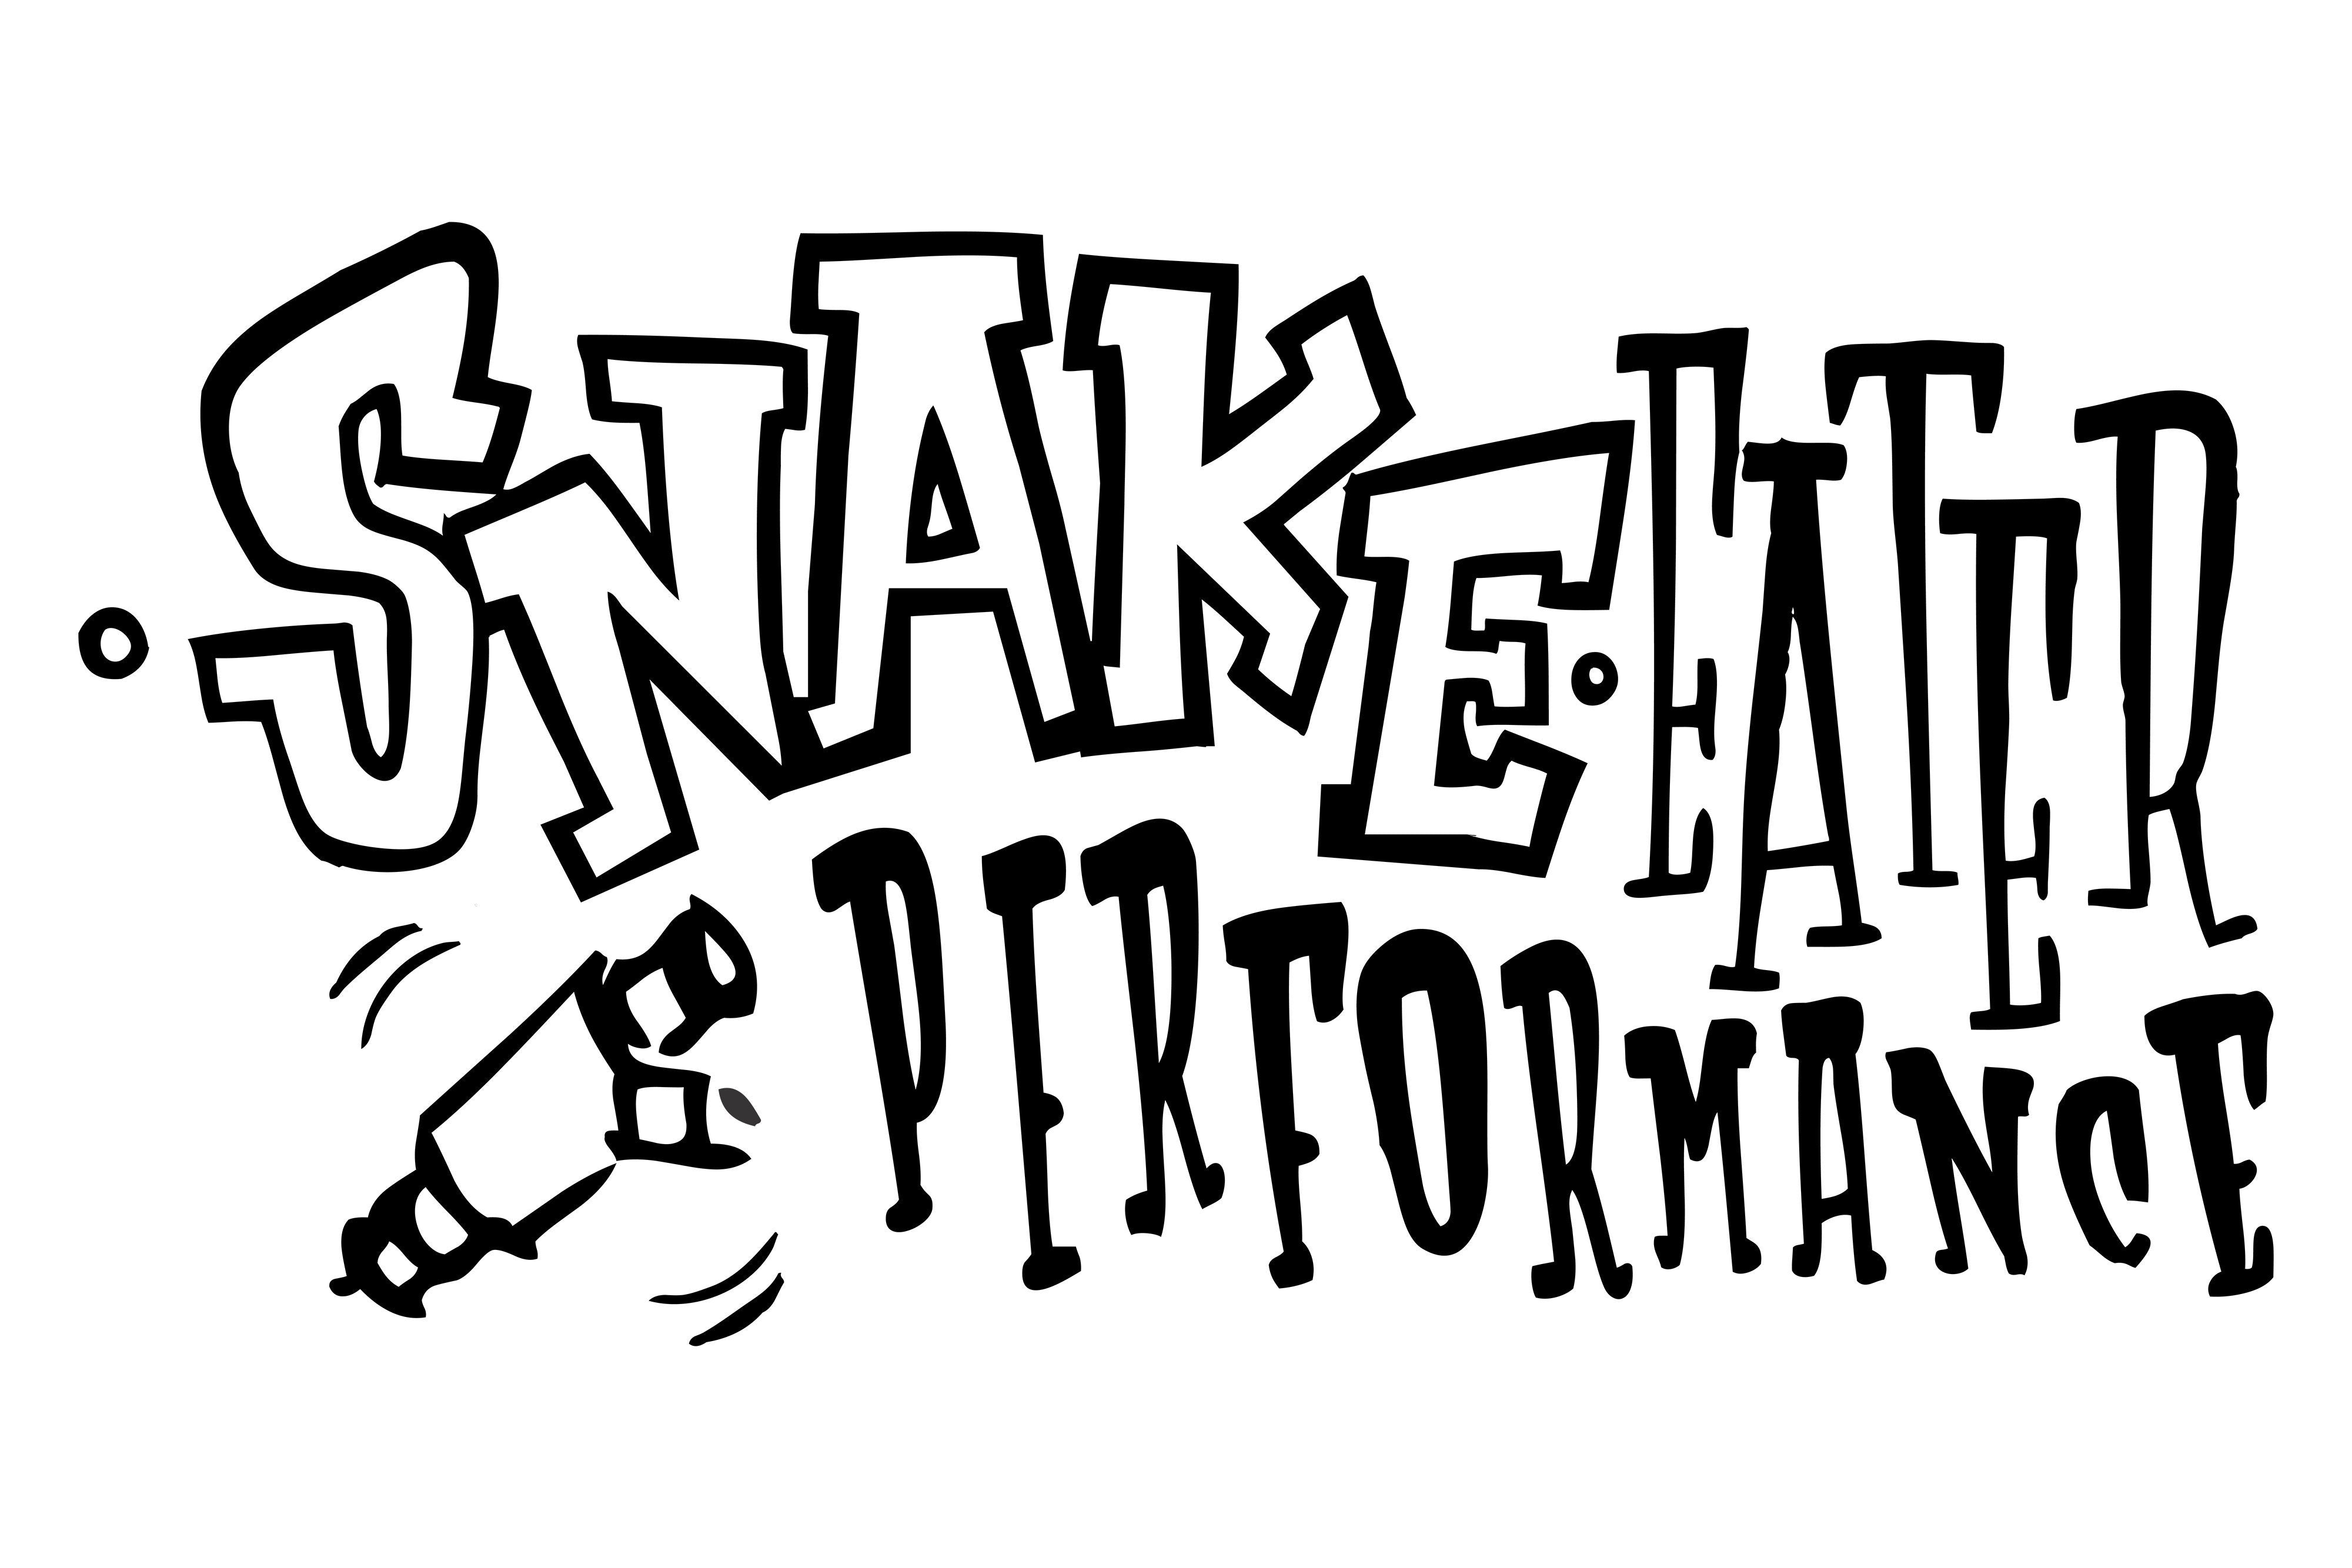 www.snakeeaterperformance.com